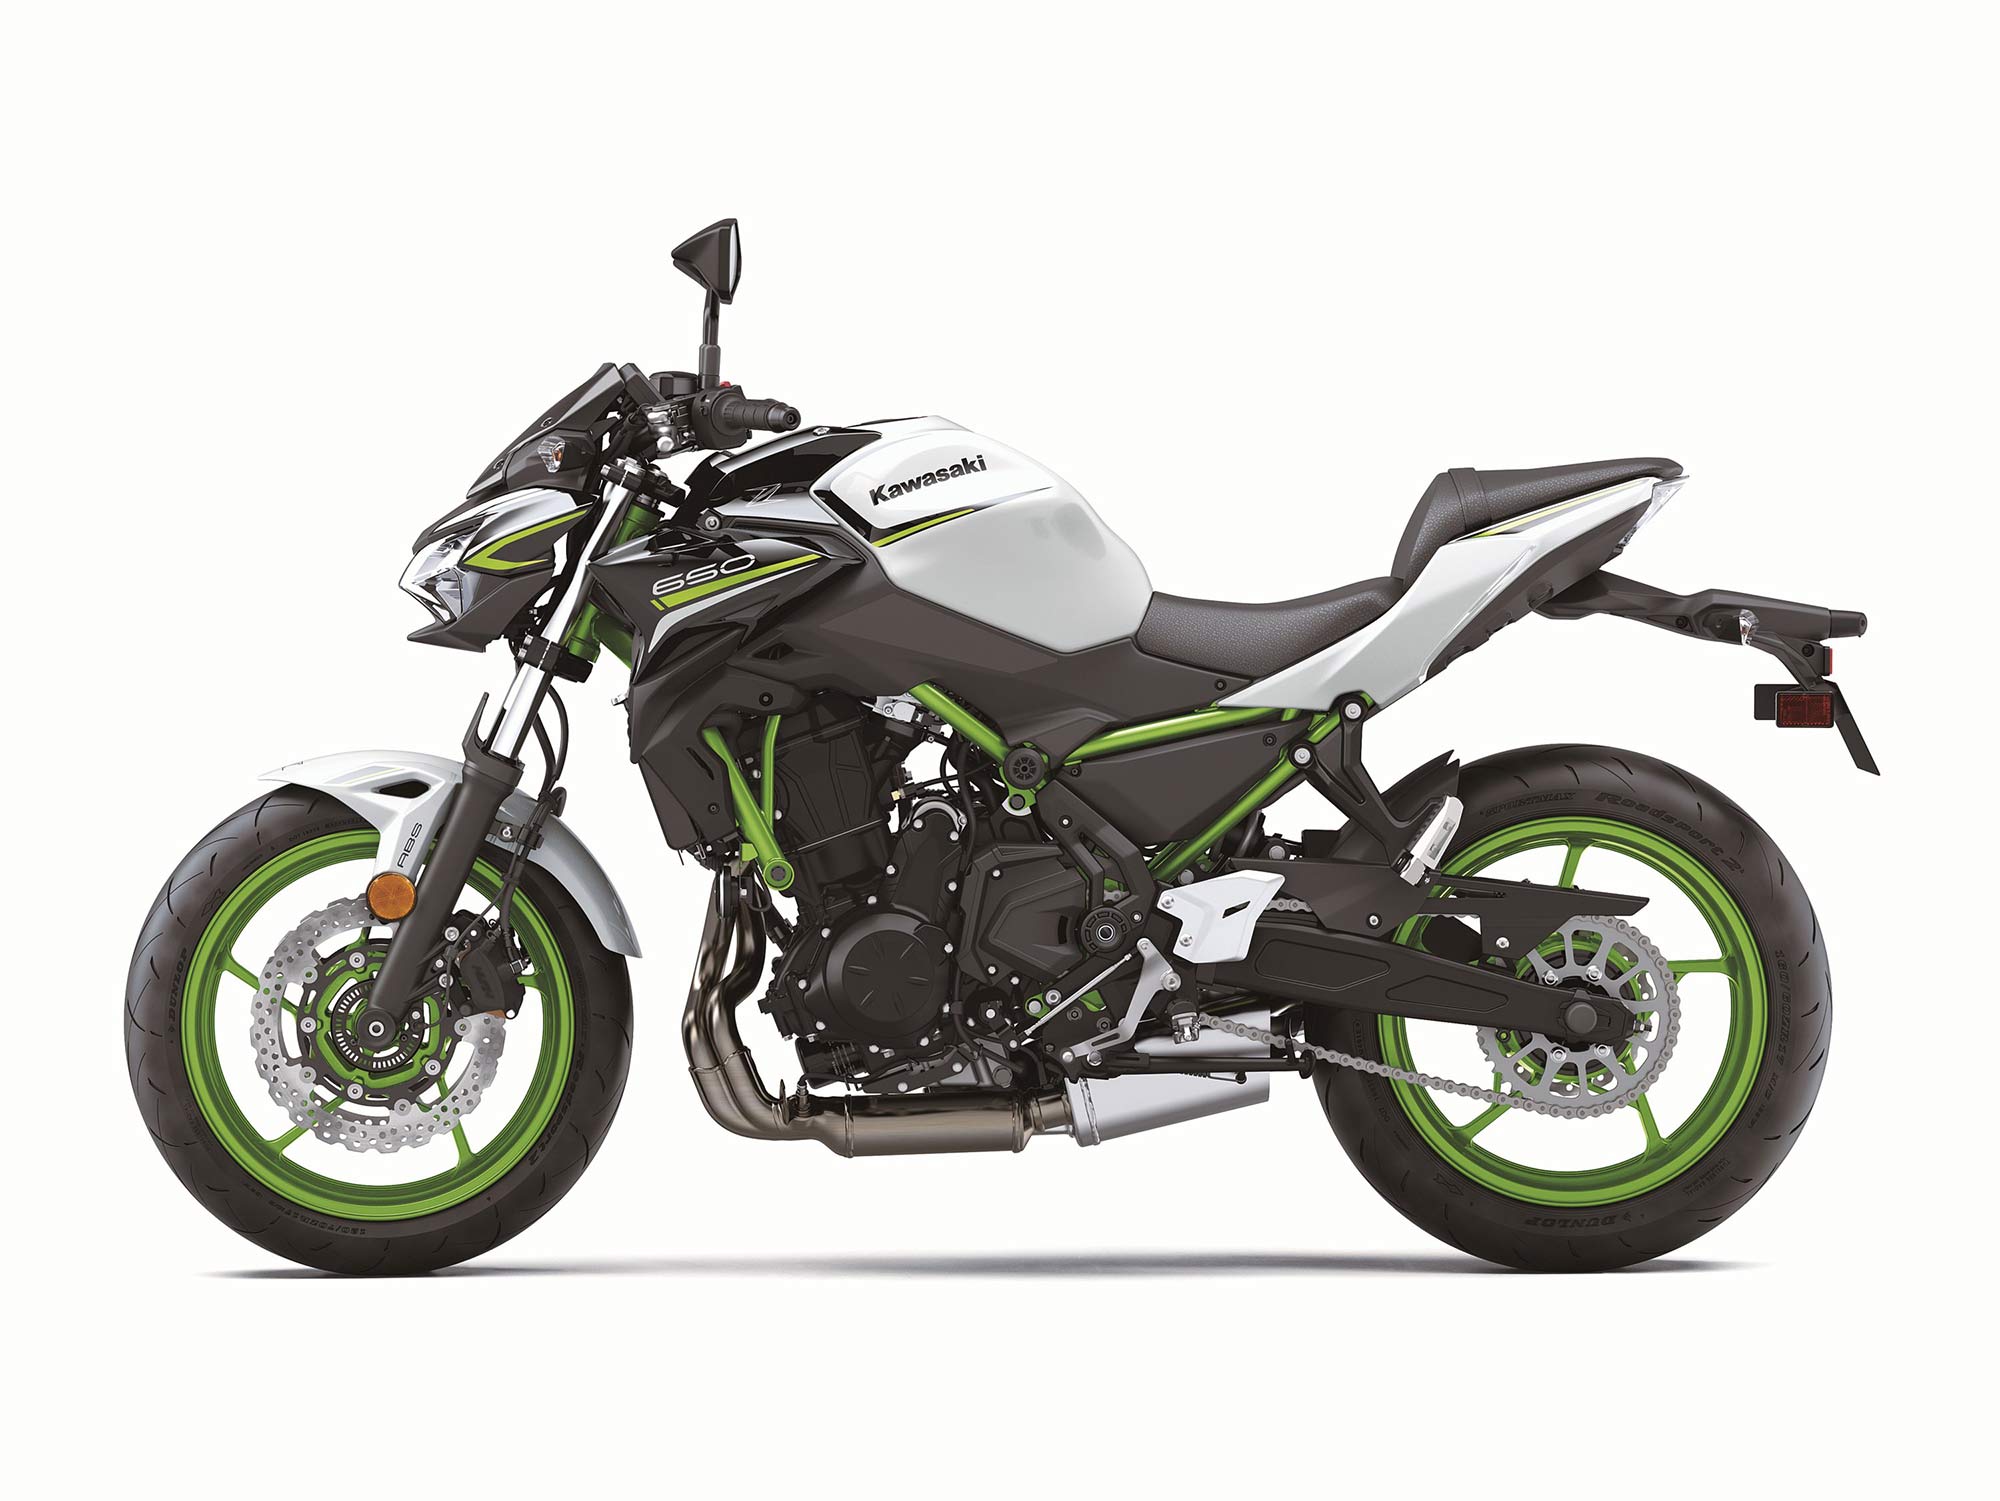 2021 Kawasaki Z650 Buyer's Guide: Specs, Photos, Price